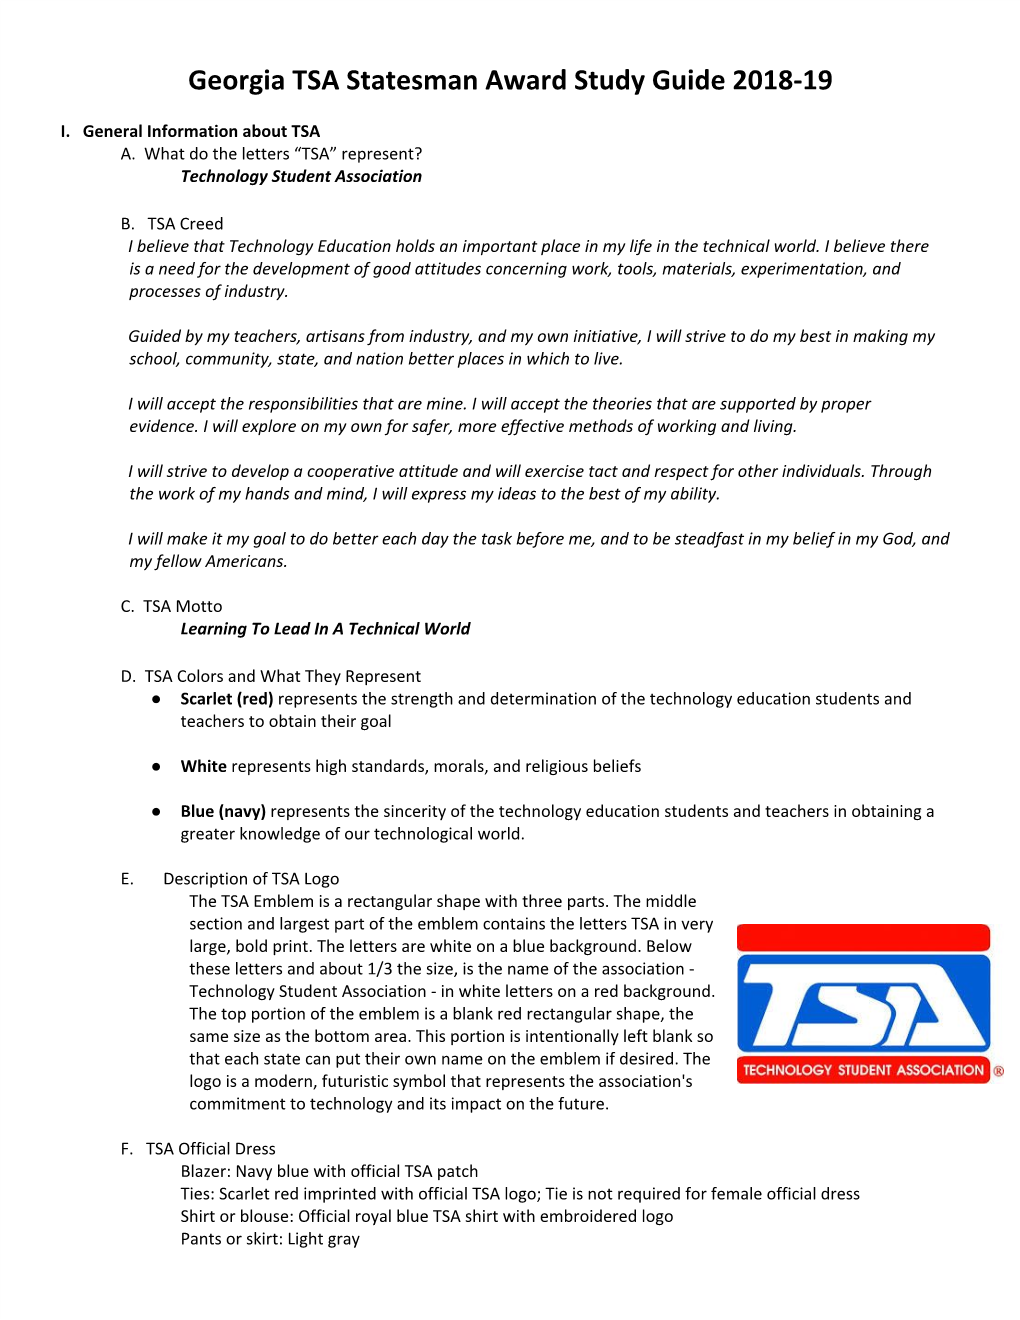 Georgia TSA Statesman Award Study Guide 2018-19